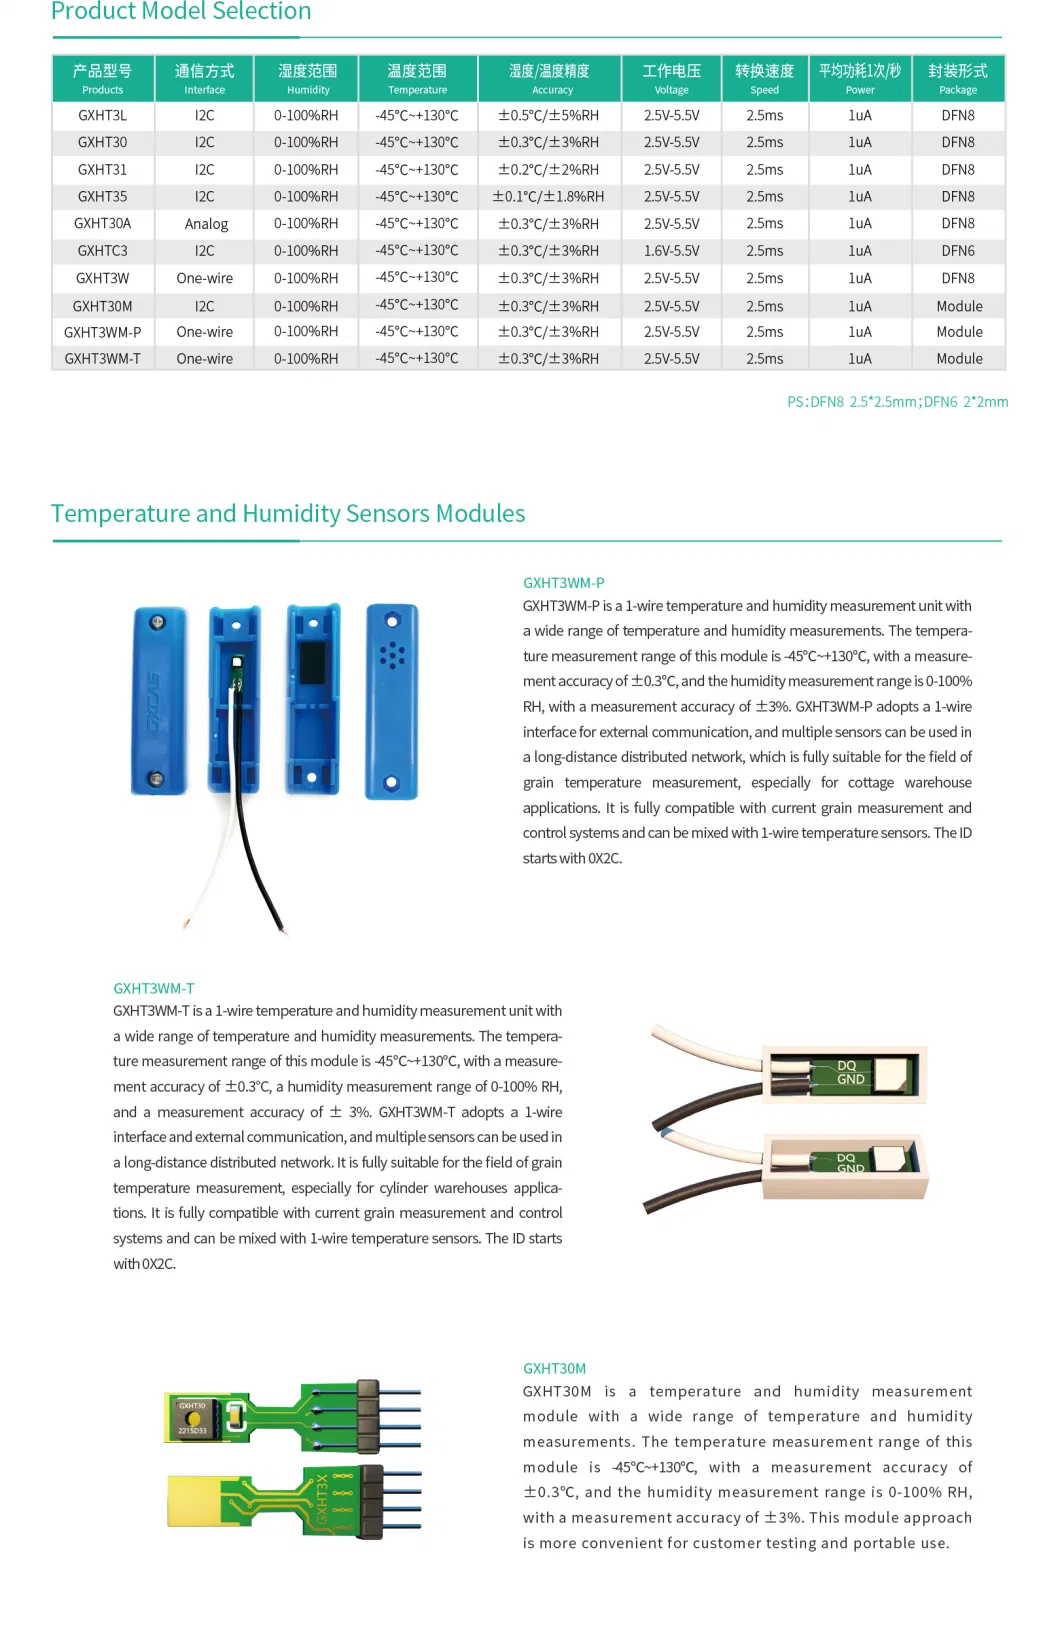 Temperature and Humidity Sensor Ictemperaturehumidnessmeasure Temperature and Humidity